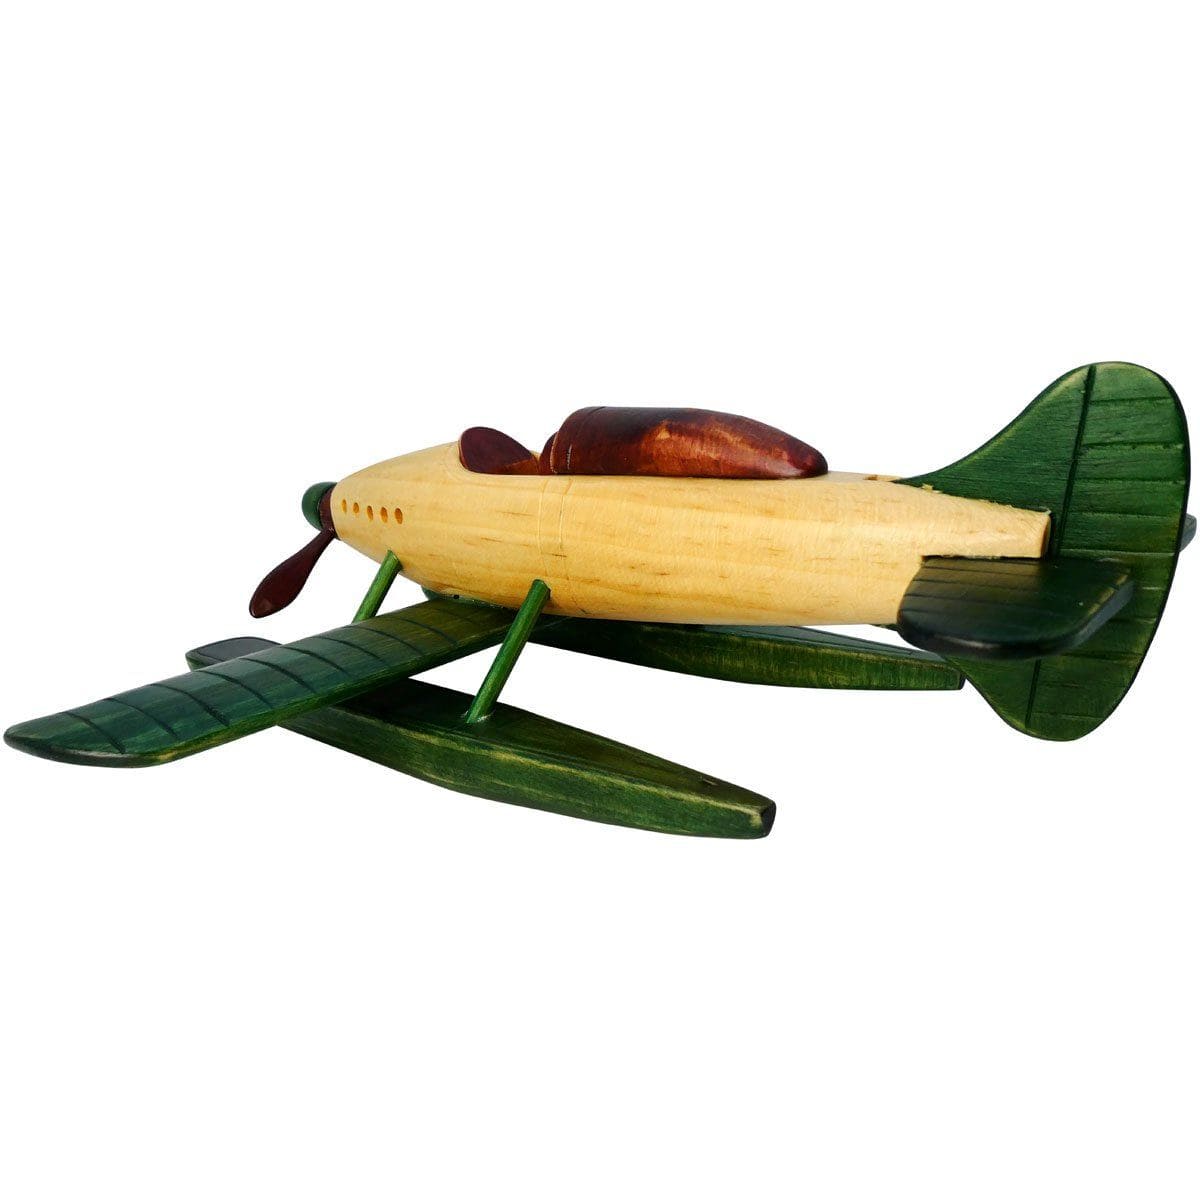 Pilot Toys Medium Wood Seaplane